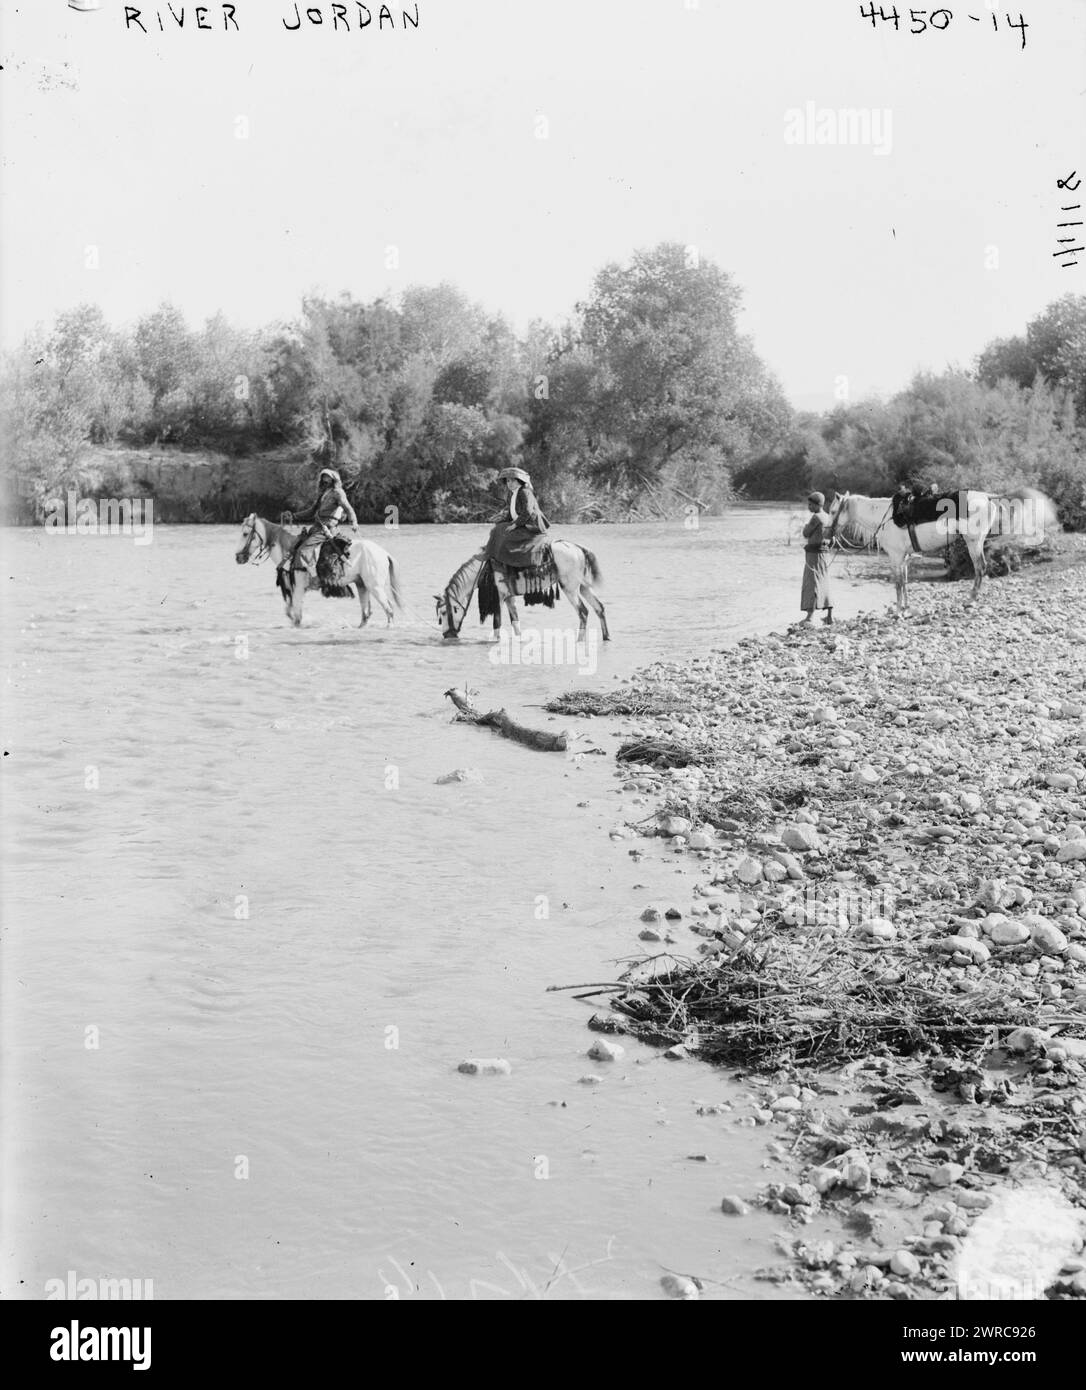 River Jordan, Photograph shows a man, boy and woman on horseback crossing the Jordan River., 1918 Jan. 1, Glass negatives, 1 negative: glass Stock Photo